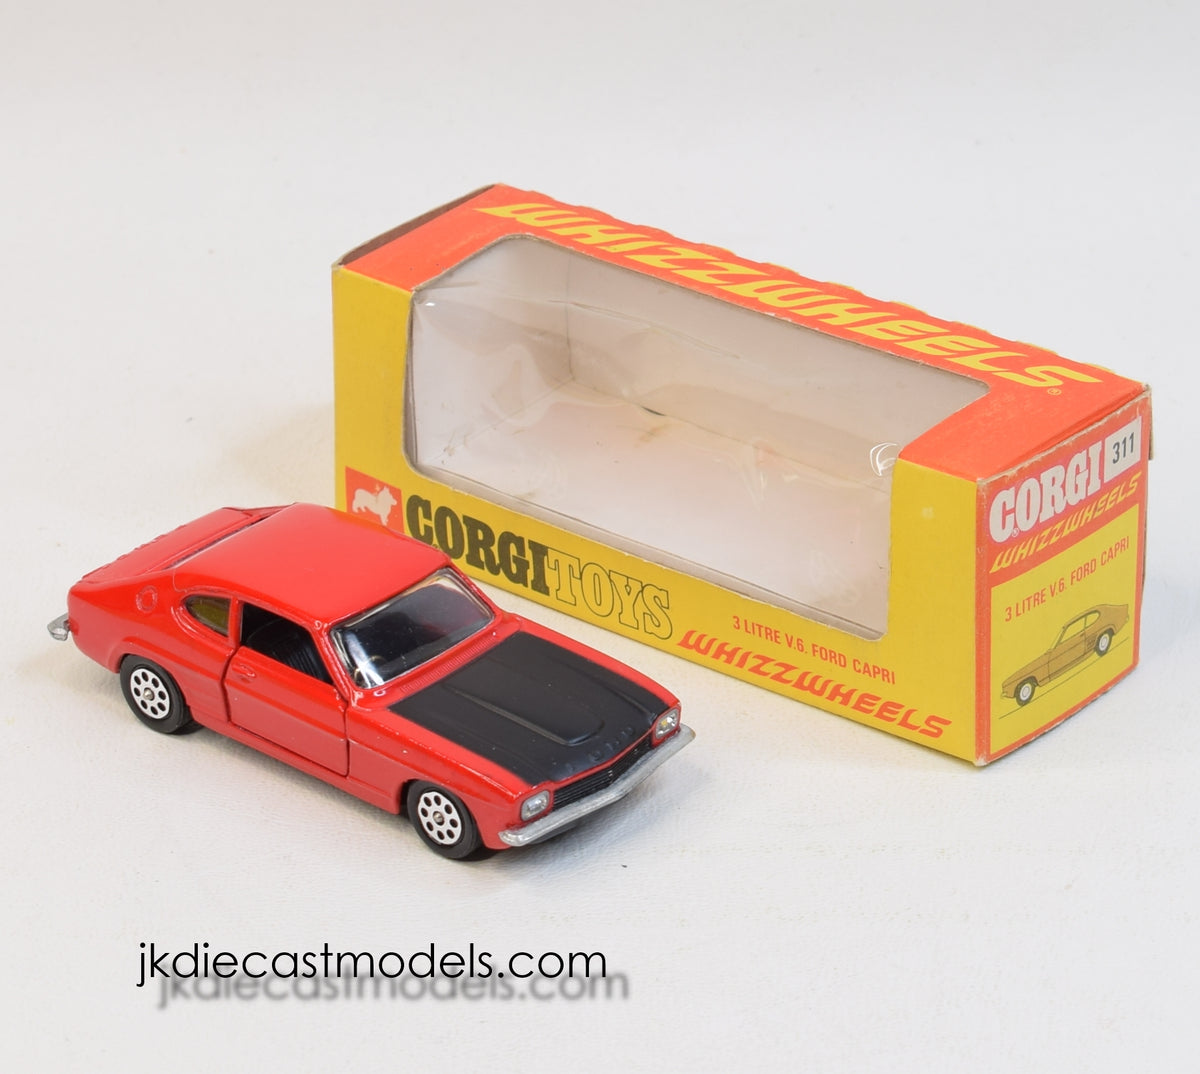 Corgi toy 311 V.6 Capri Virtually Mint/Boxed 'Avonmore' Collection (Pepper pots)